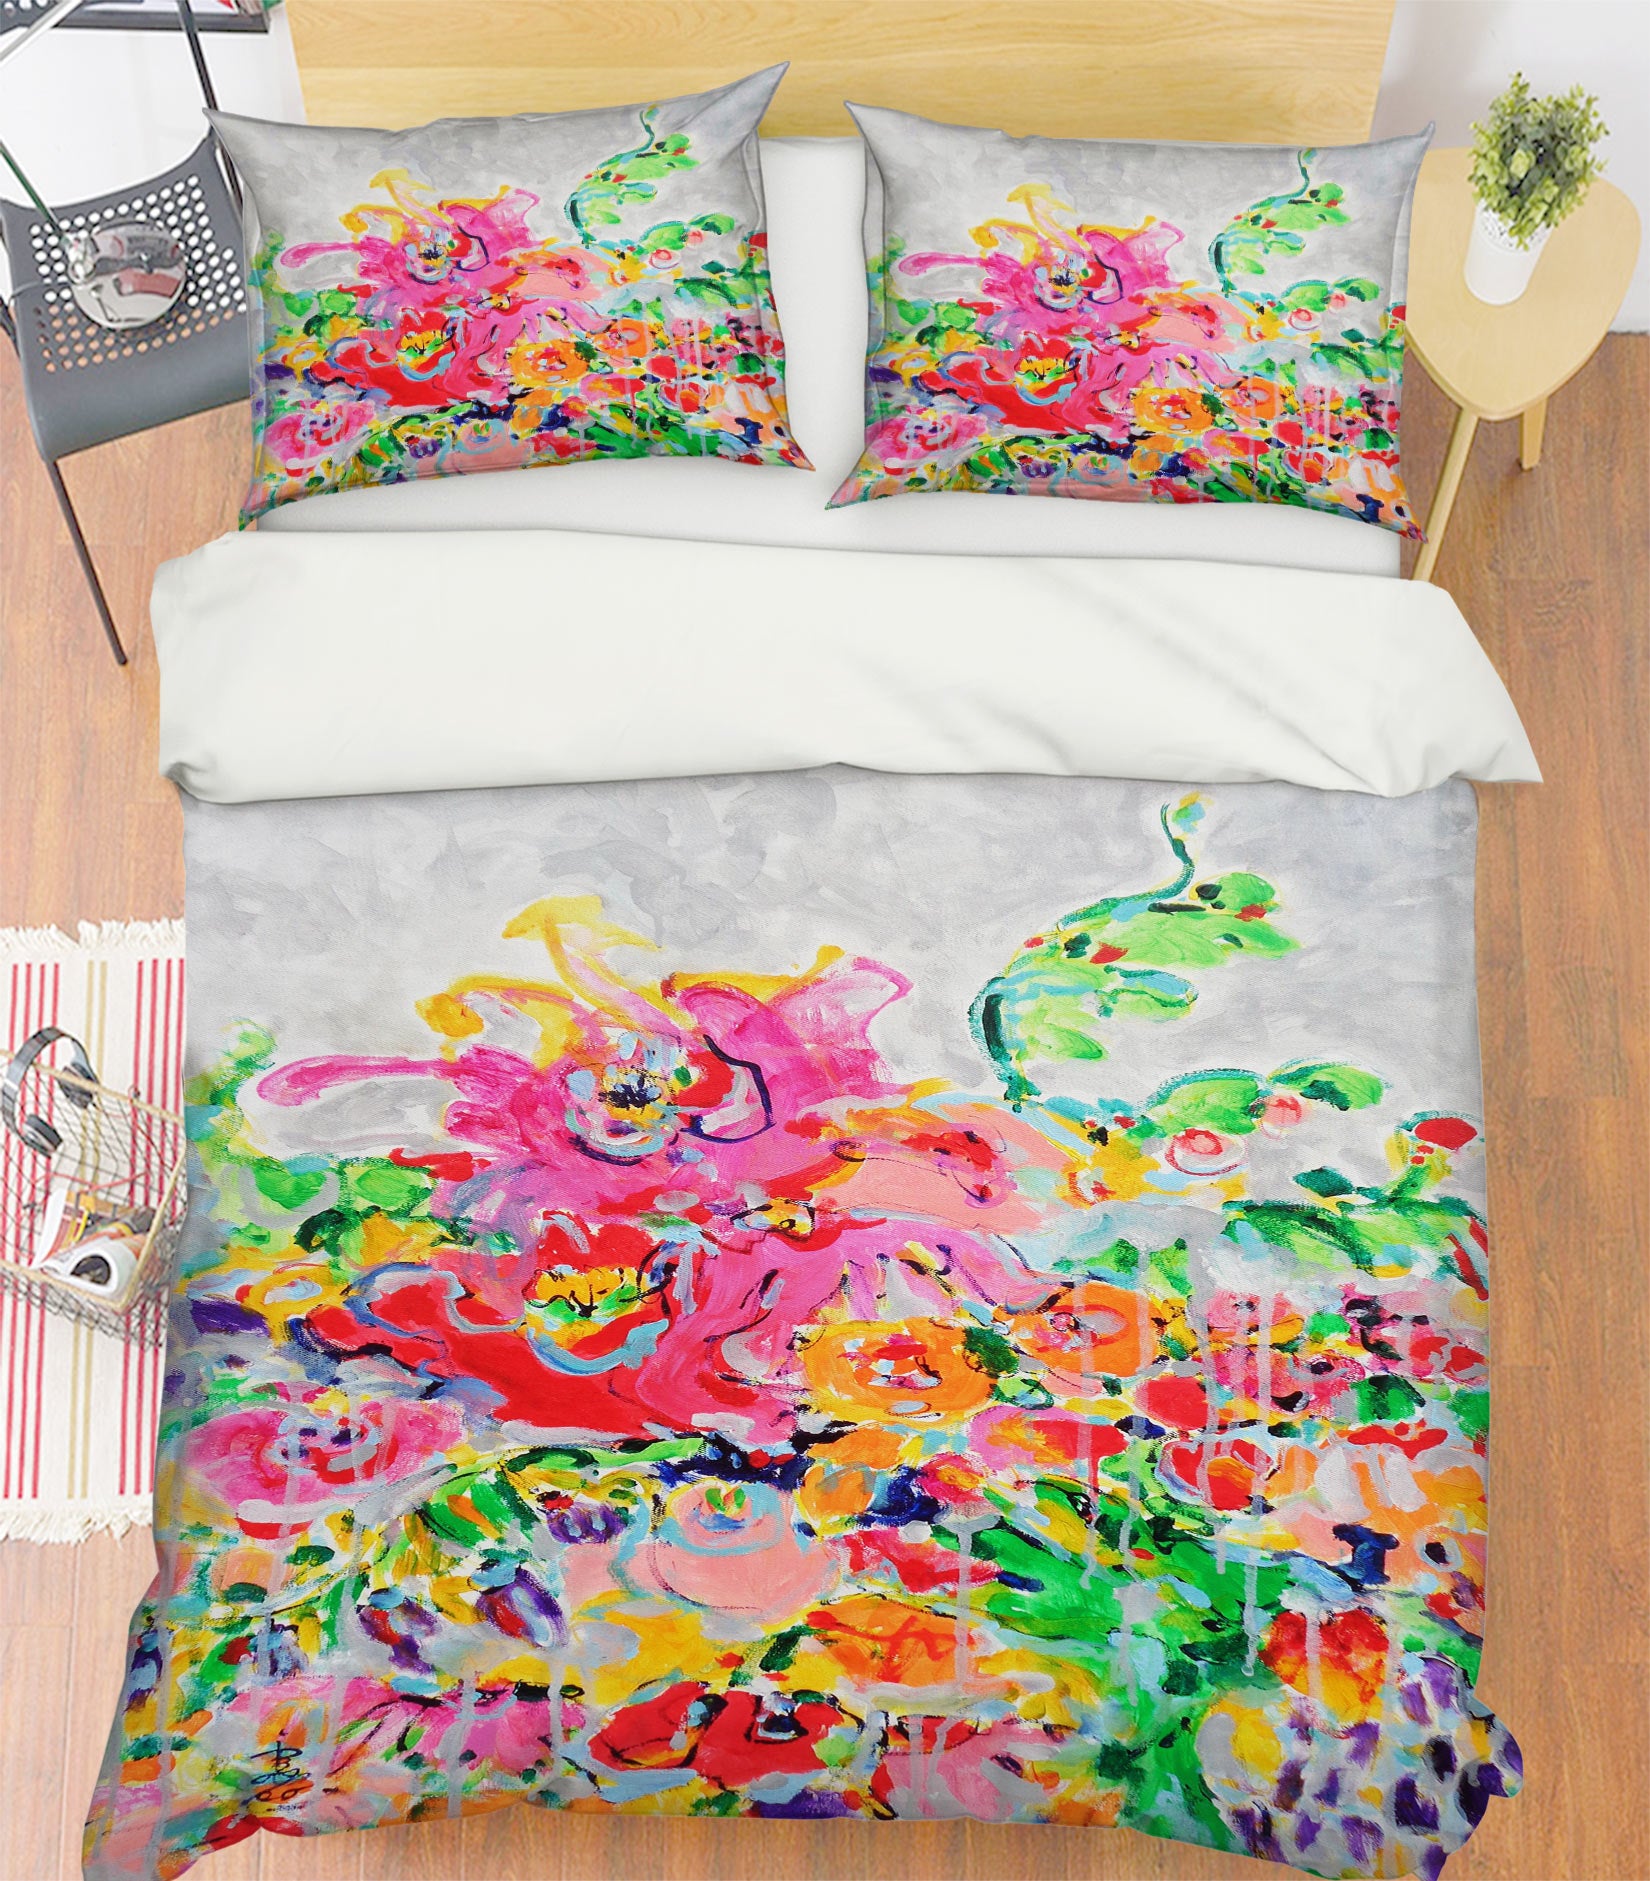 3D Colorful Petals 1225 Misako Chida Bedding Bed Pillowcases Quilt Cover Duvet Cover